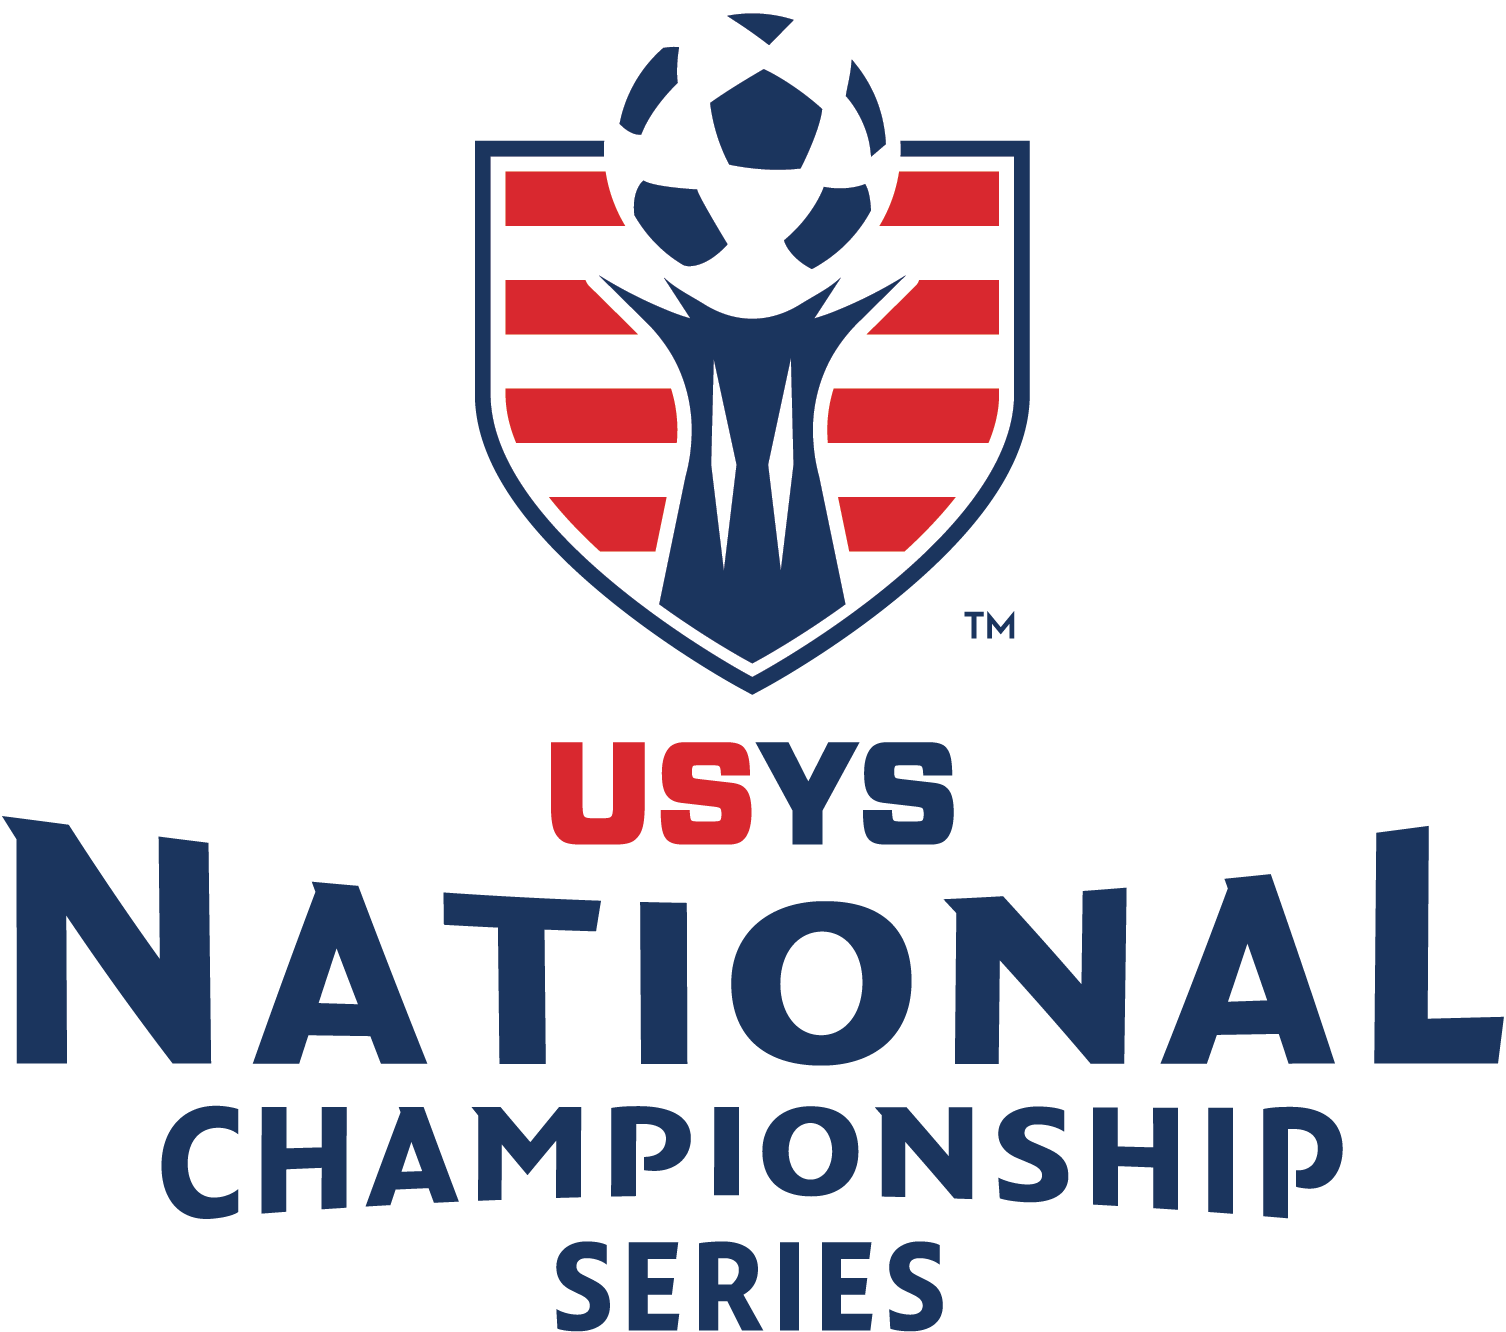 National Championship Series